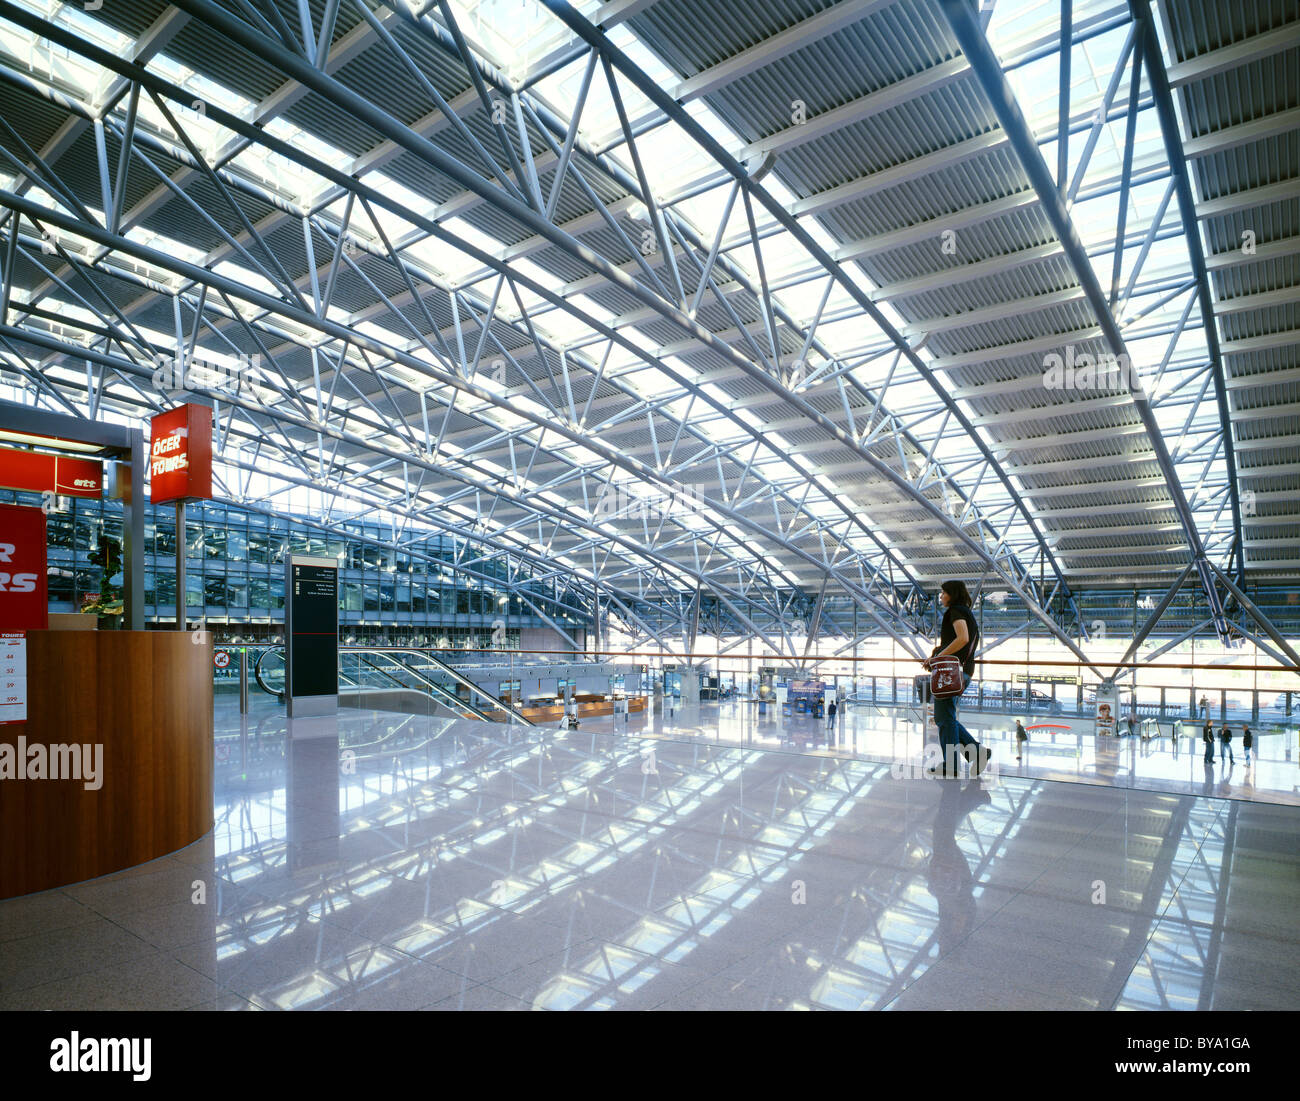 Hamburg Airport Terminal Maps